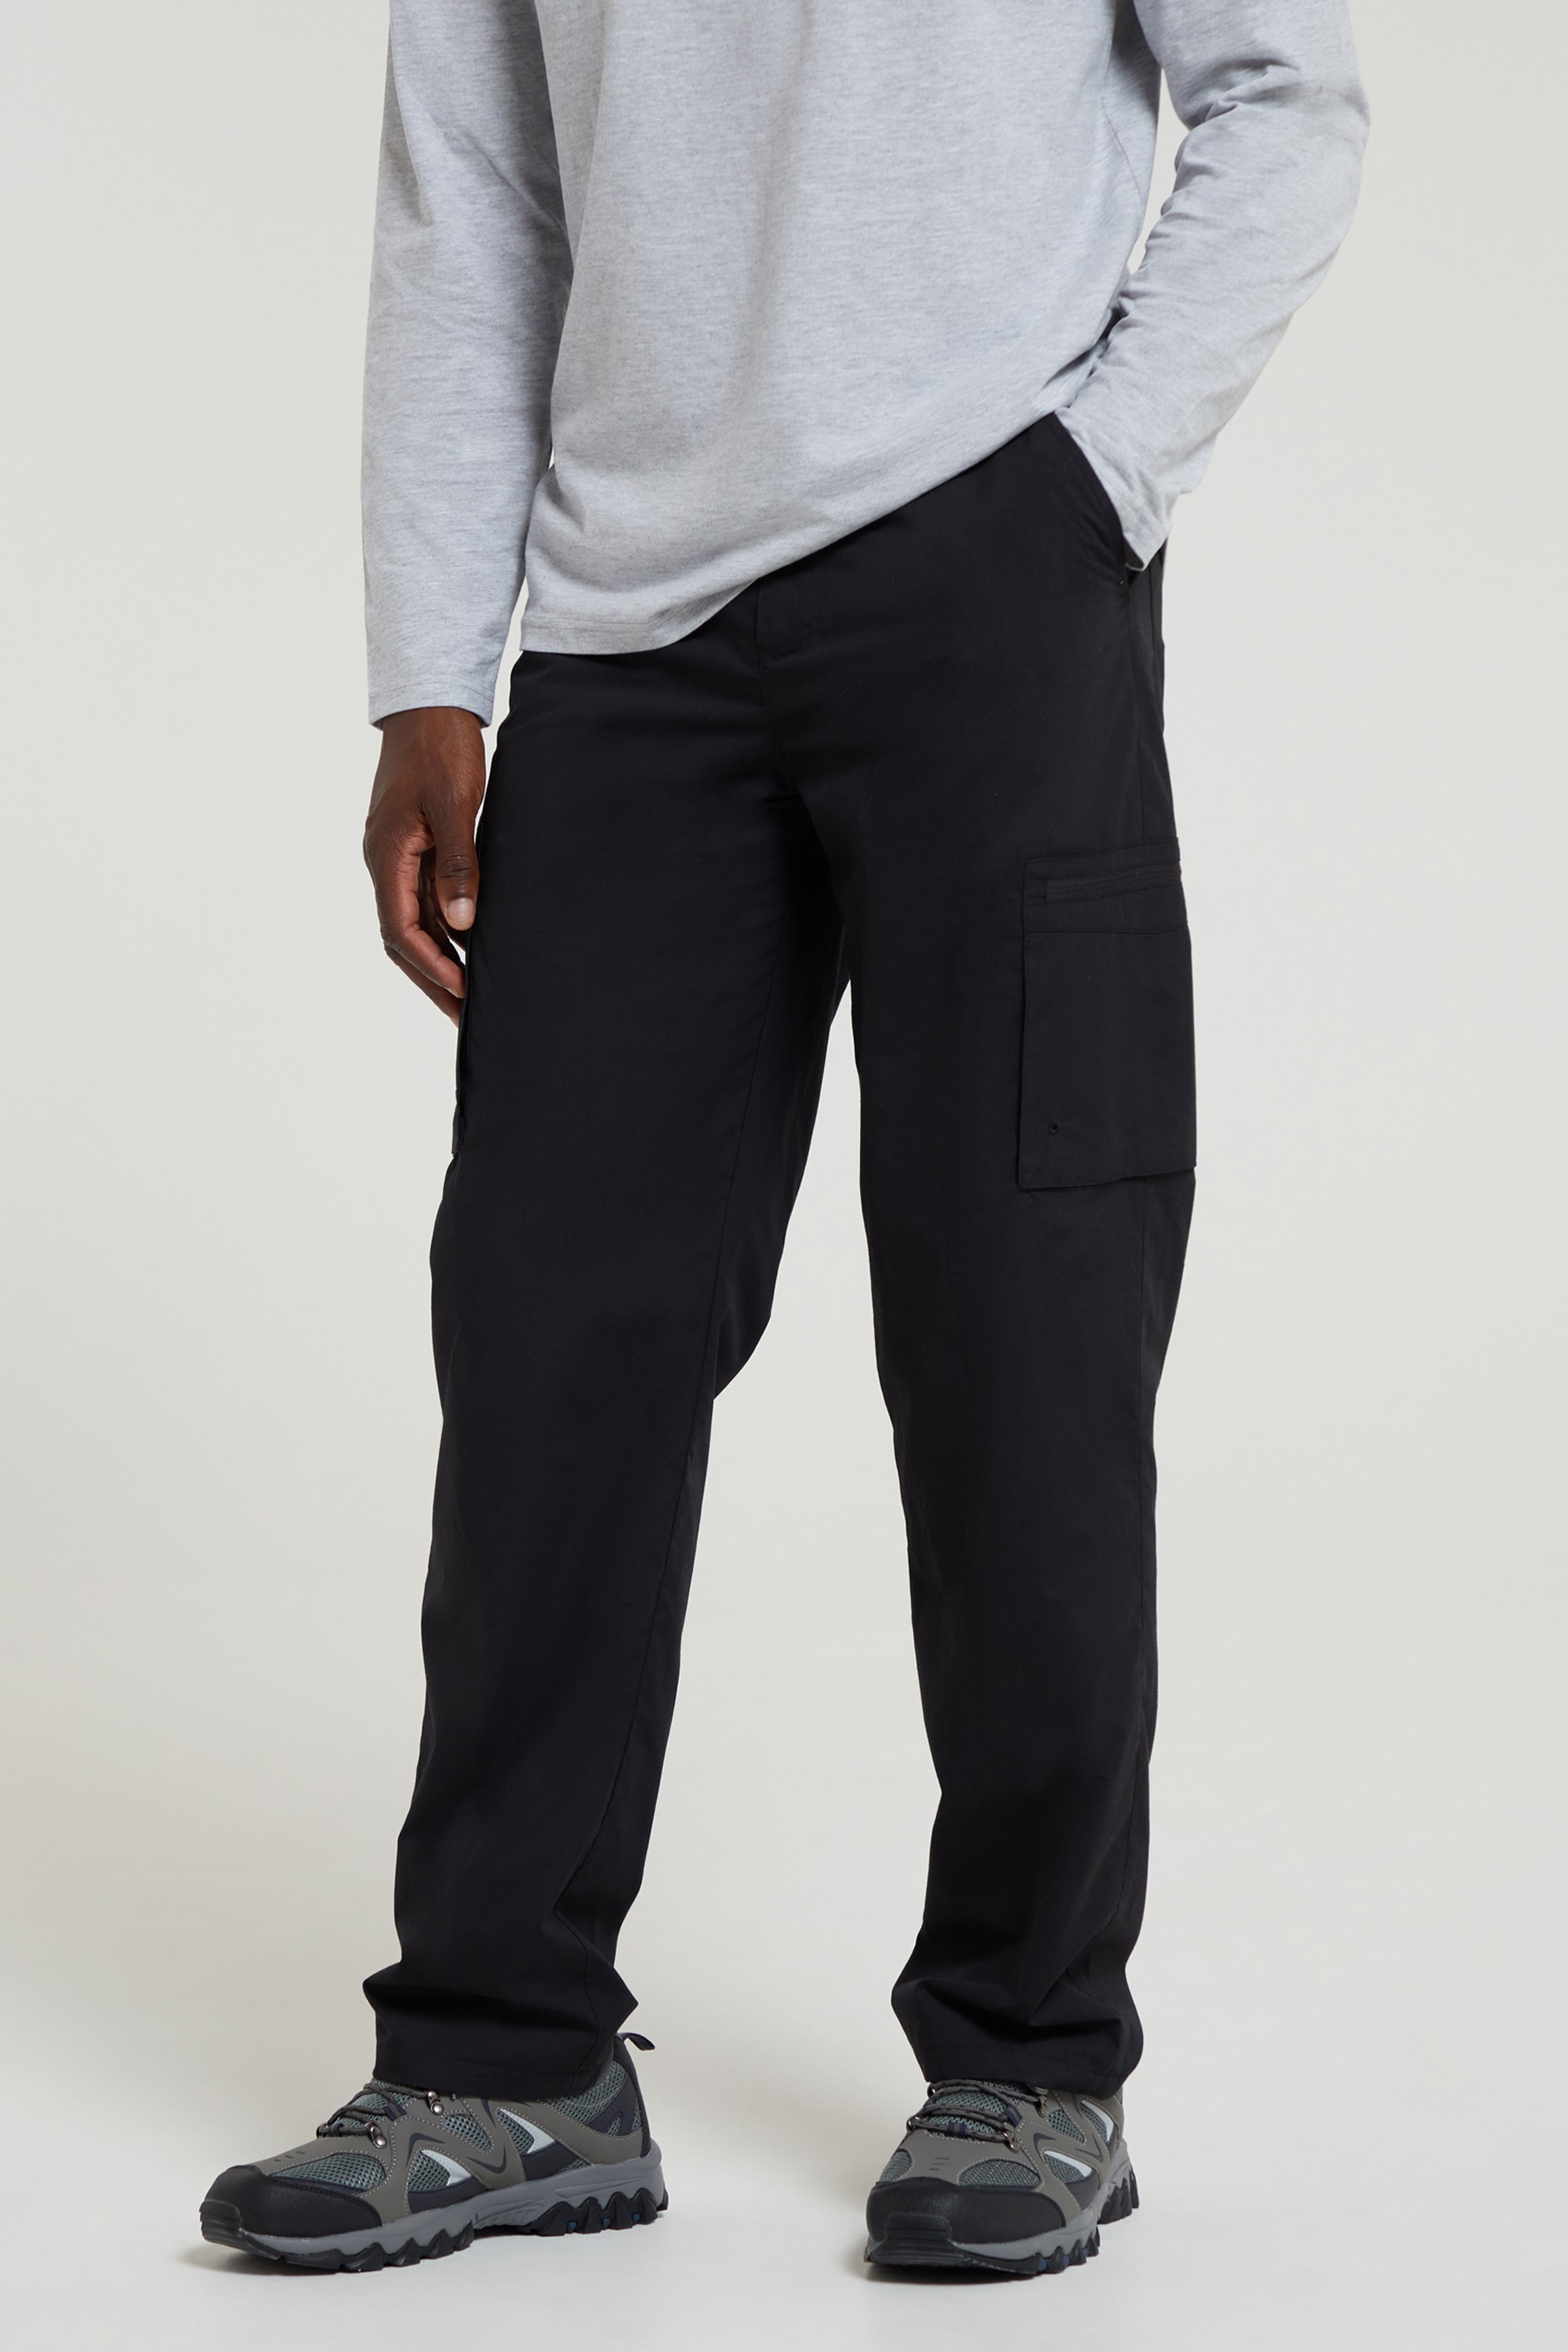 Mellycharm Fleeceactive - Unisex Fleece-Lined Waterproof Pants, Dododz  Trousers | eBay